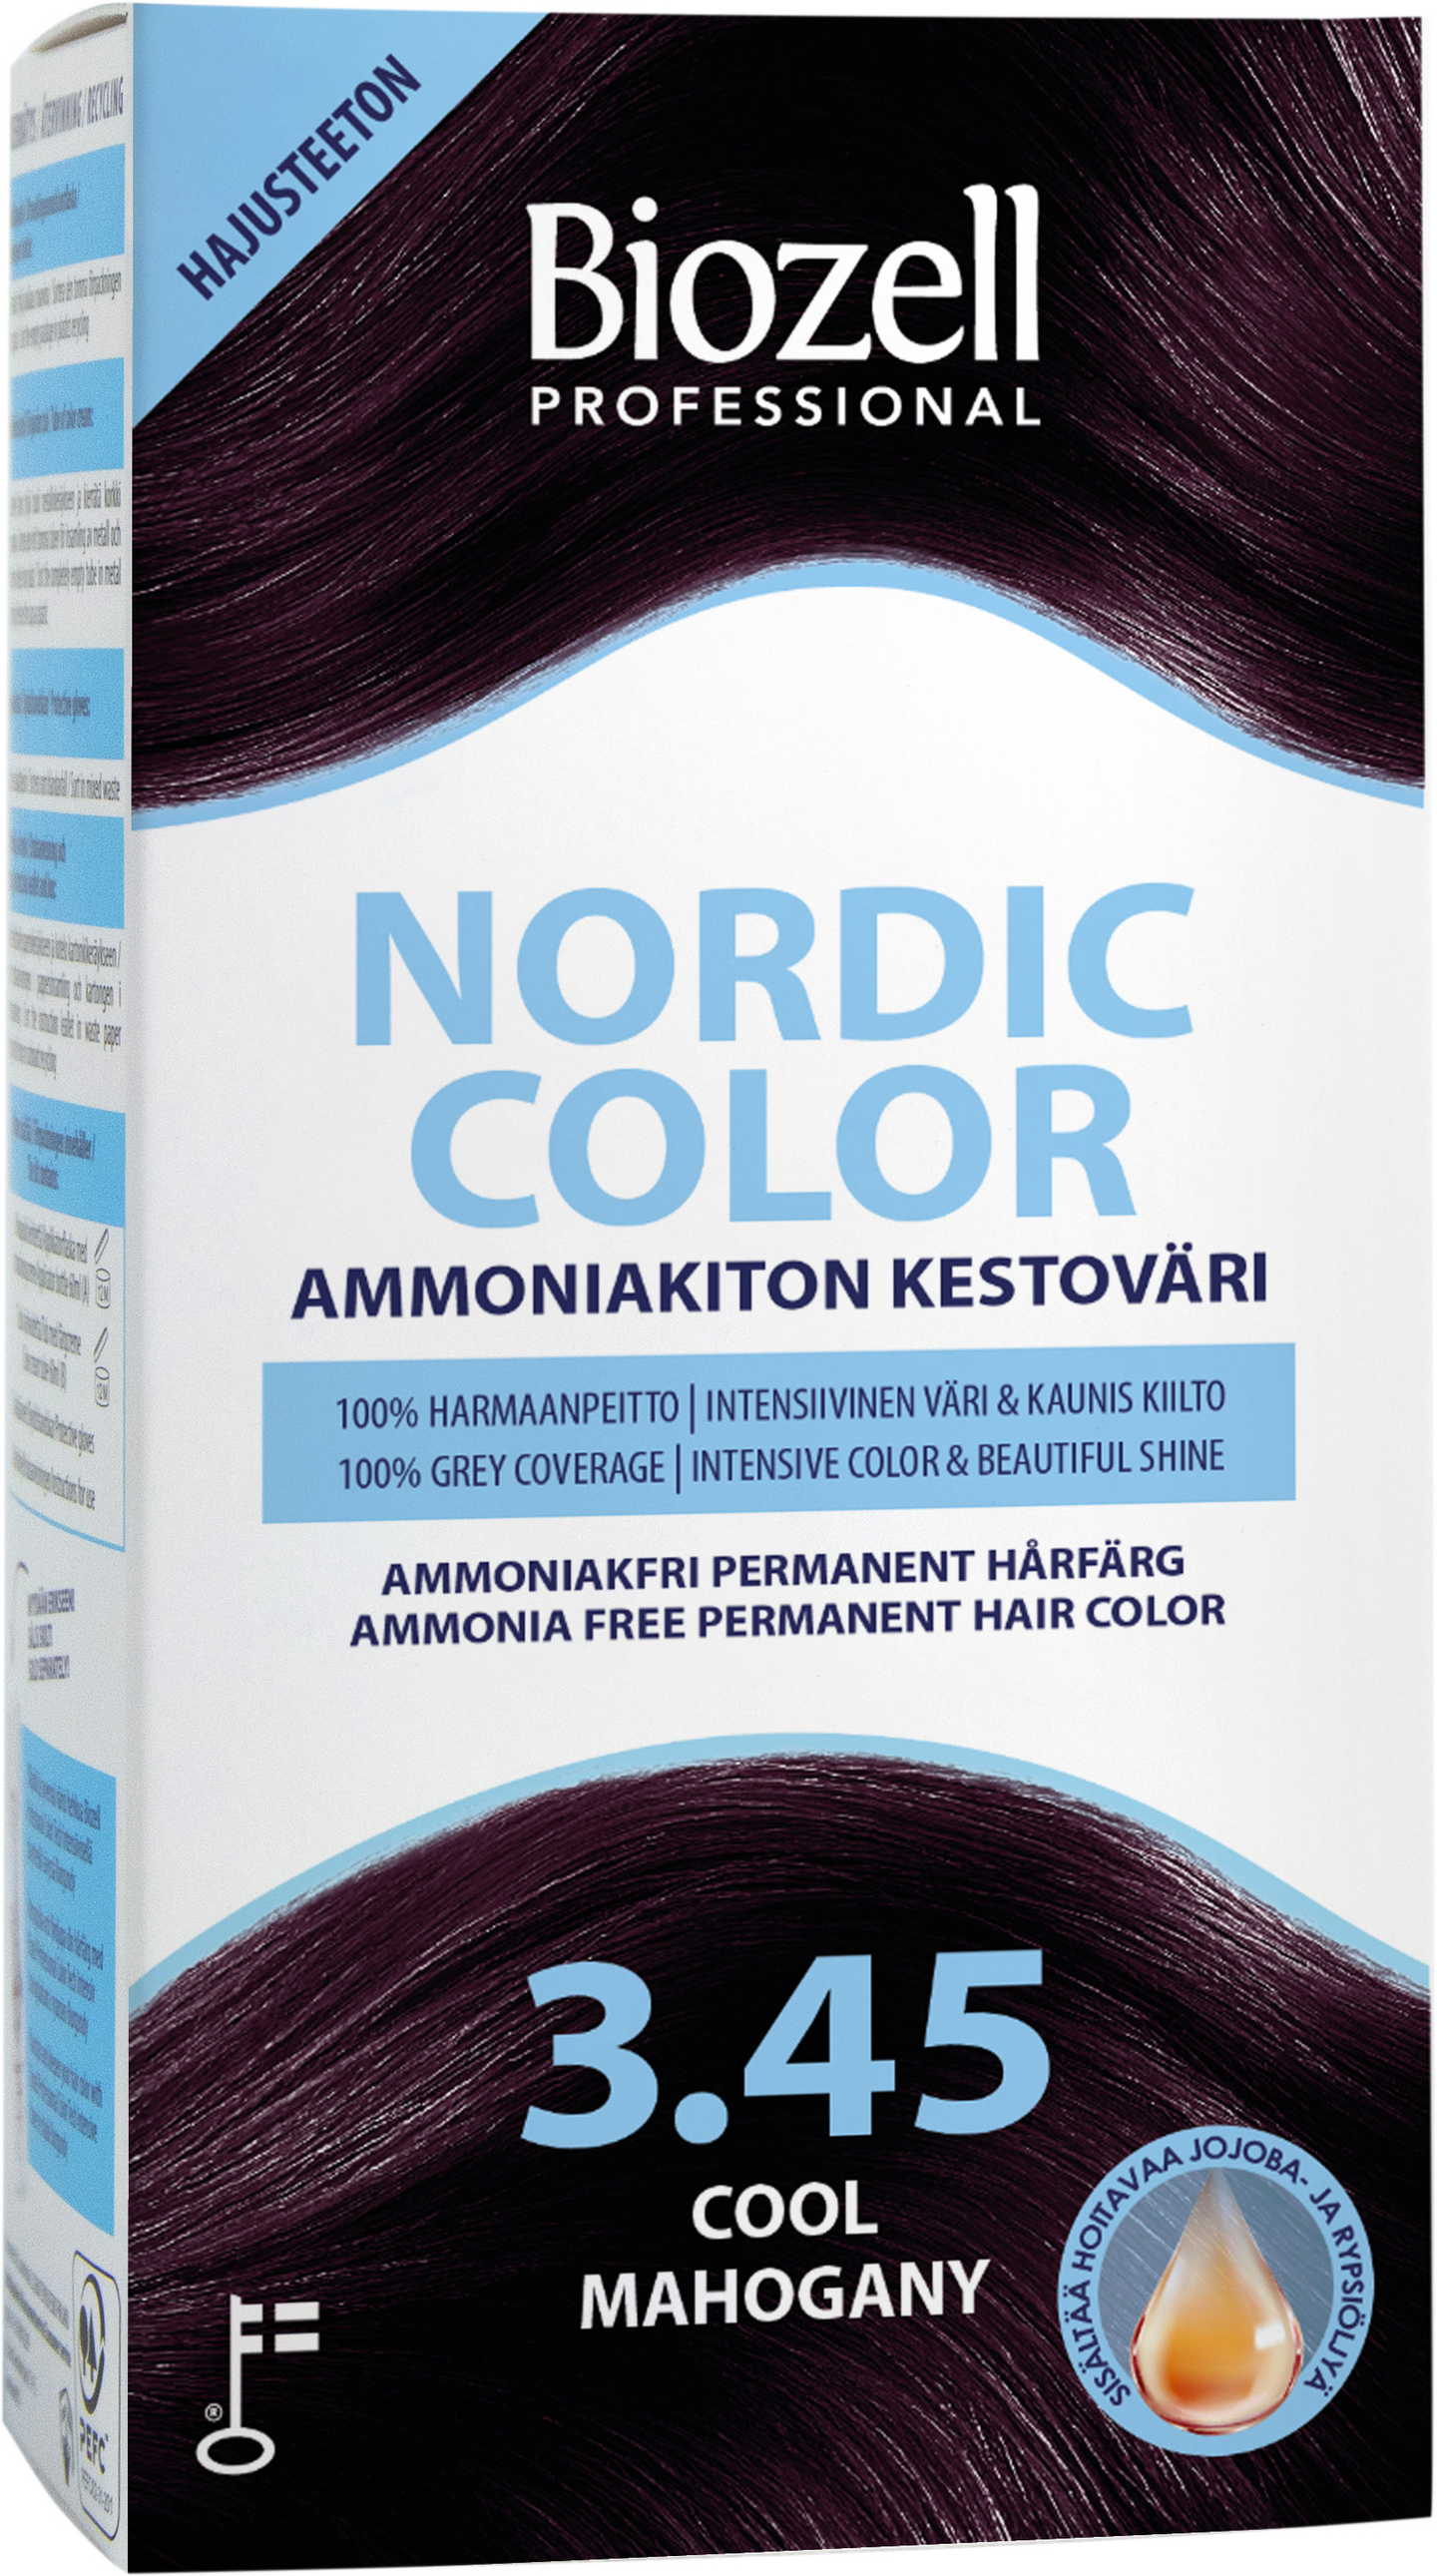 Biozell Professional Nordic Color kestoväri 3.45 2x60ml Cool Mahogany ammoniakiton